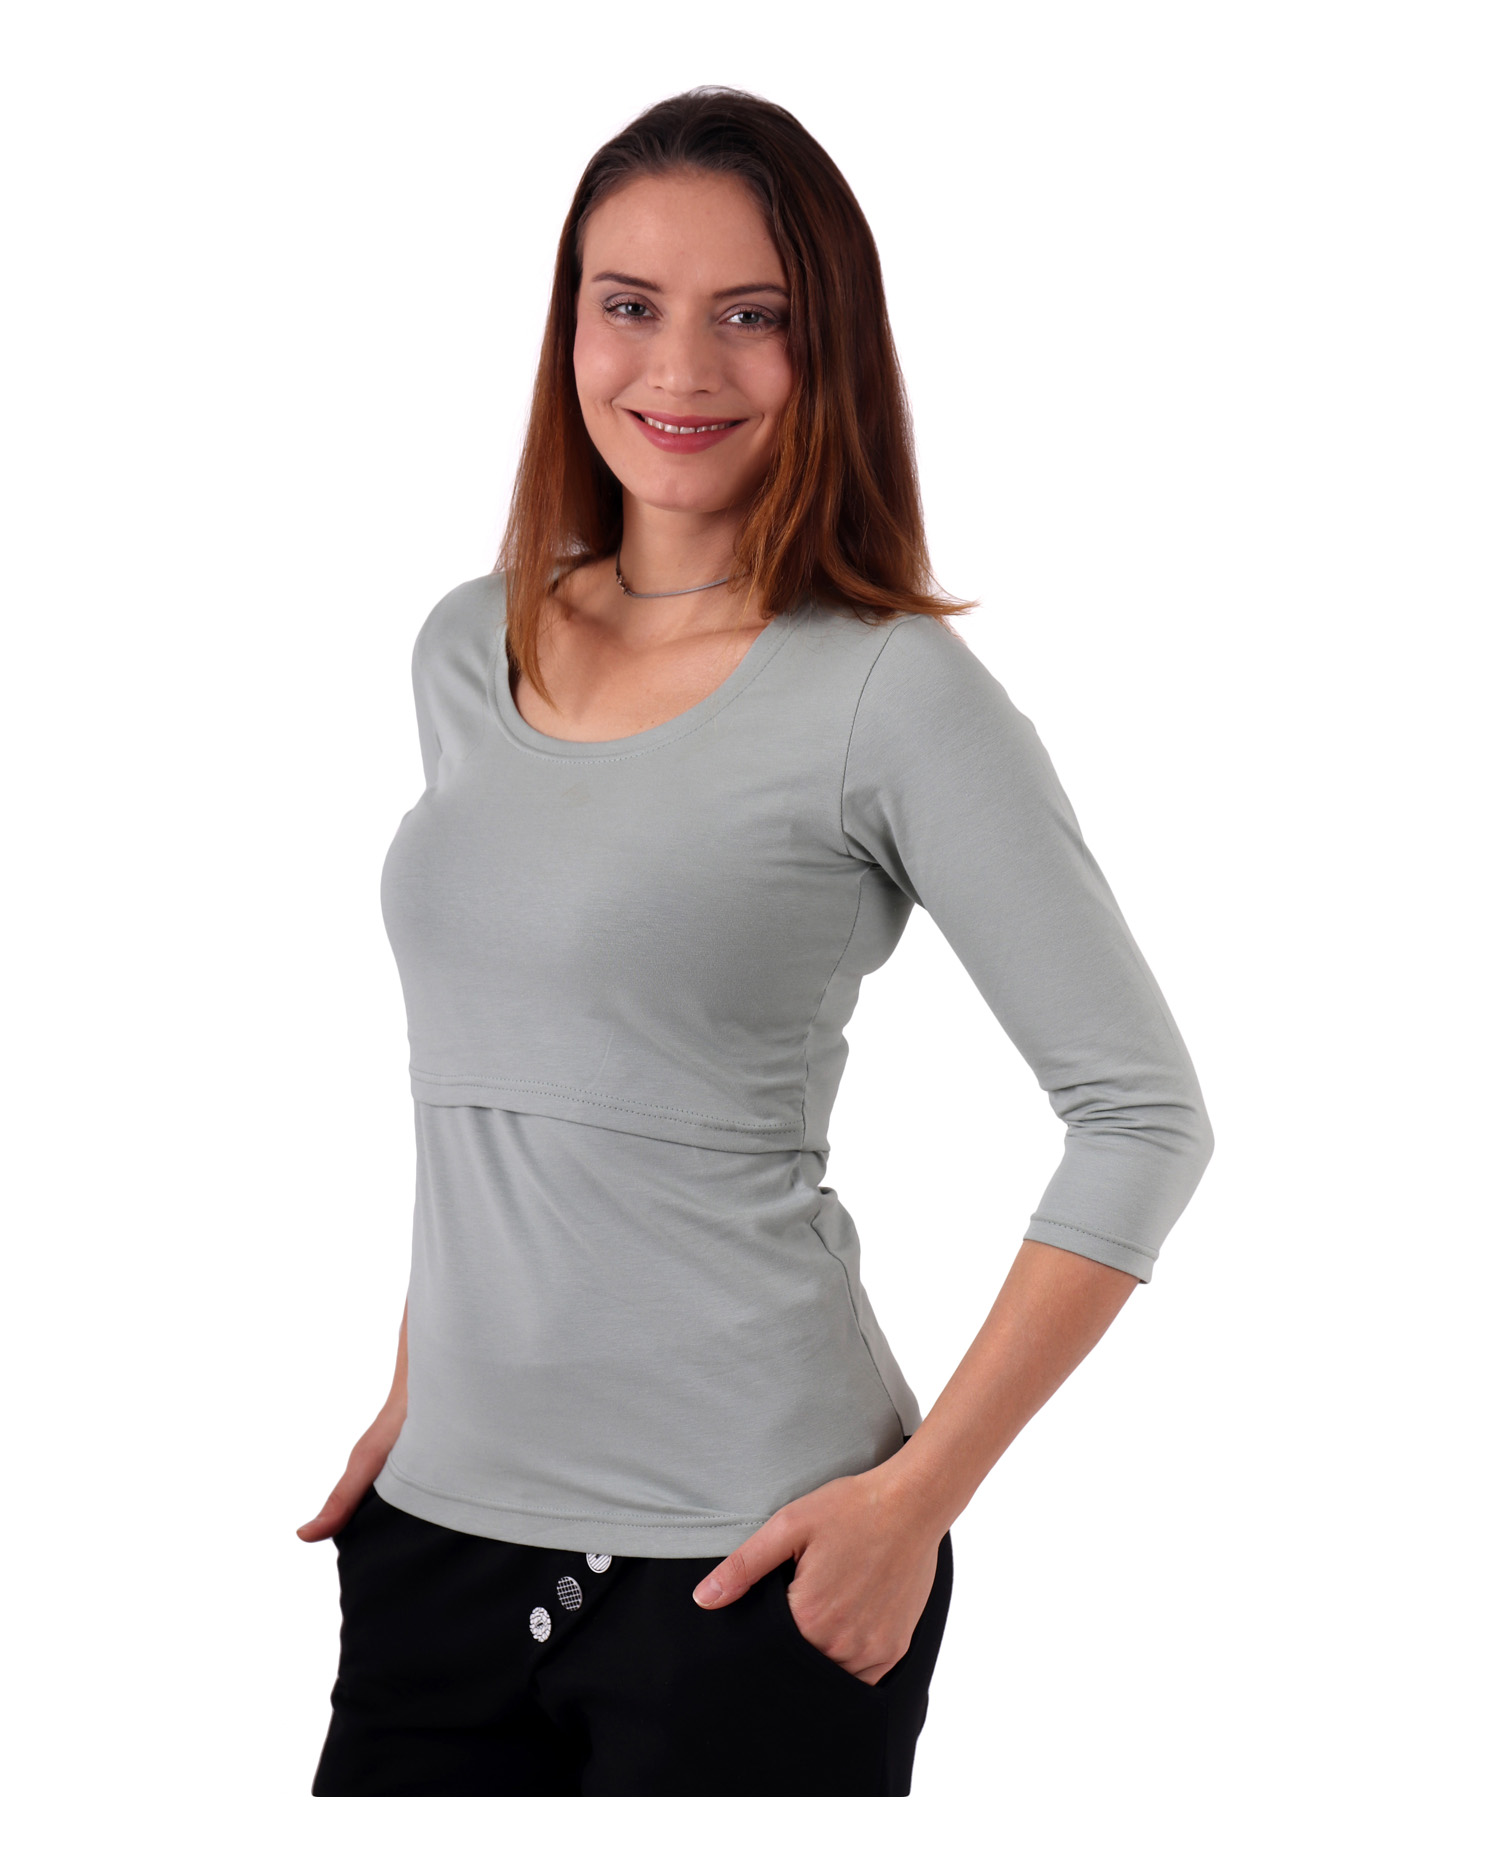 Breast-feeding T-shirt Katerina, 3/4 sleeves, olive